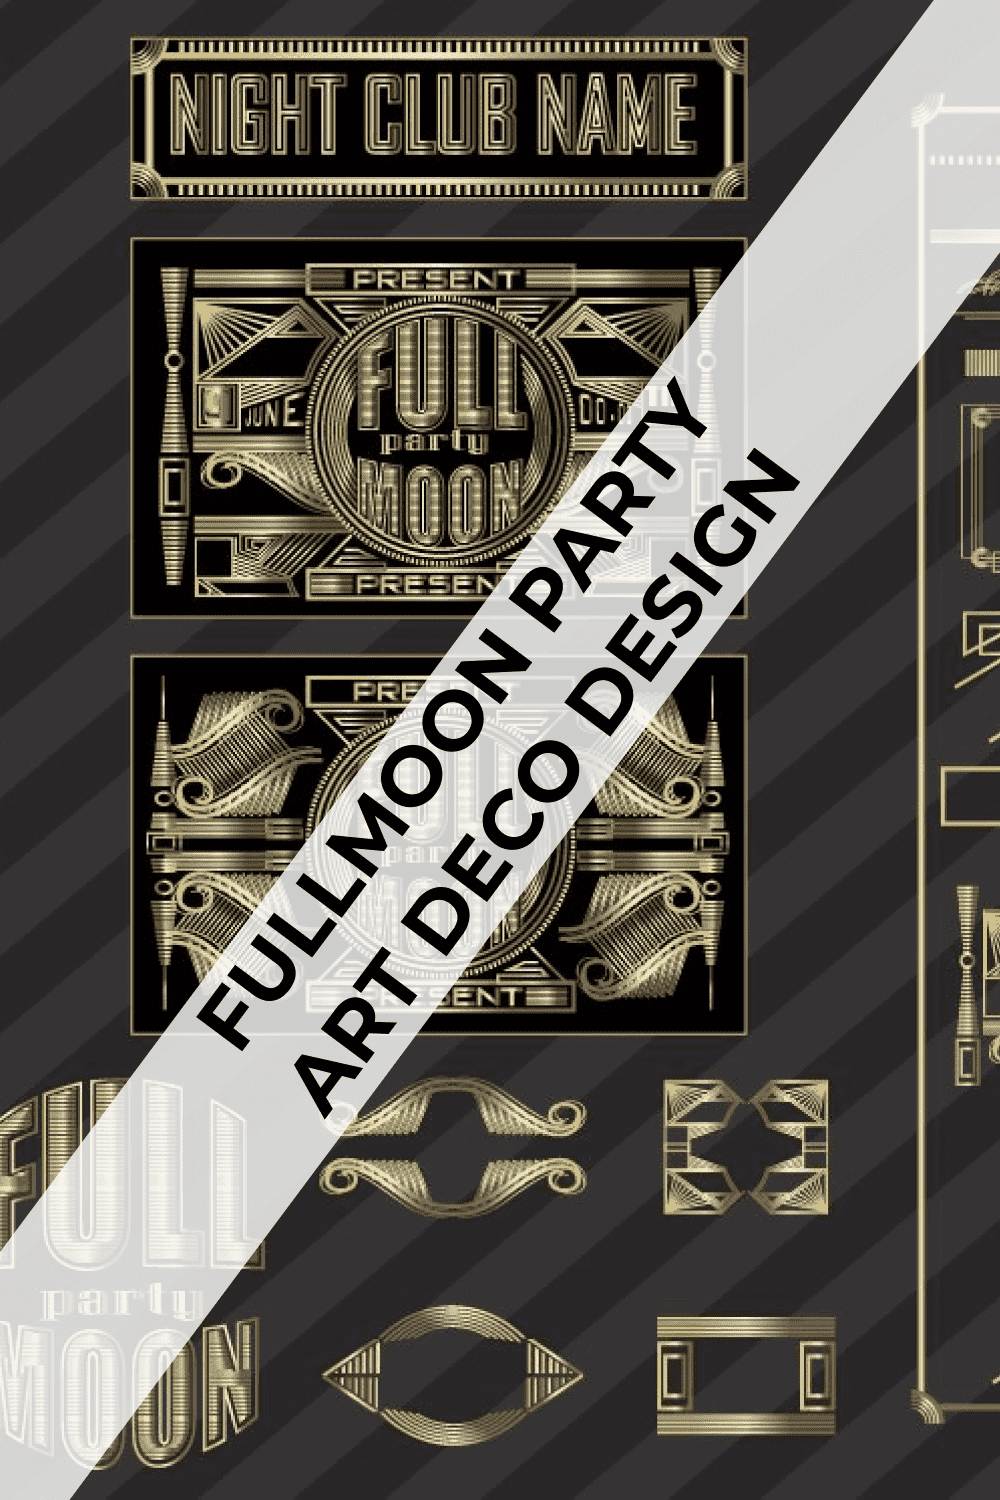 fullmoon party art deco design pinterest image.